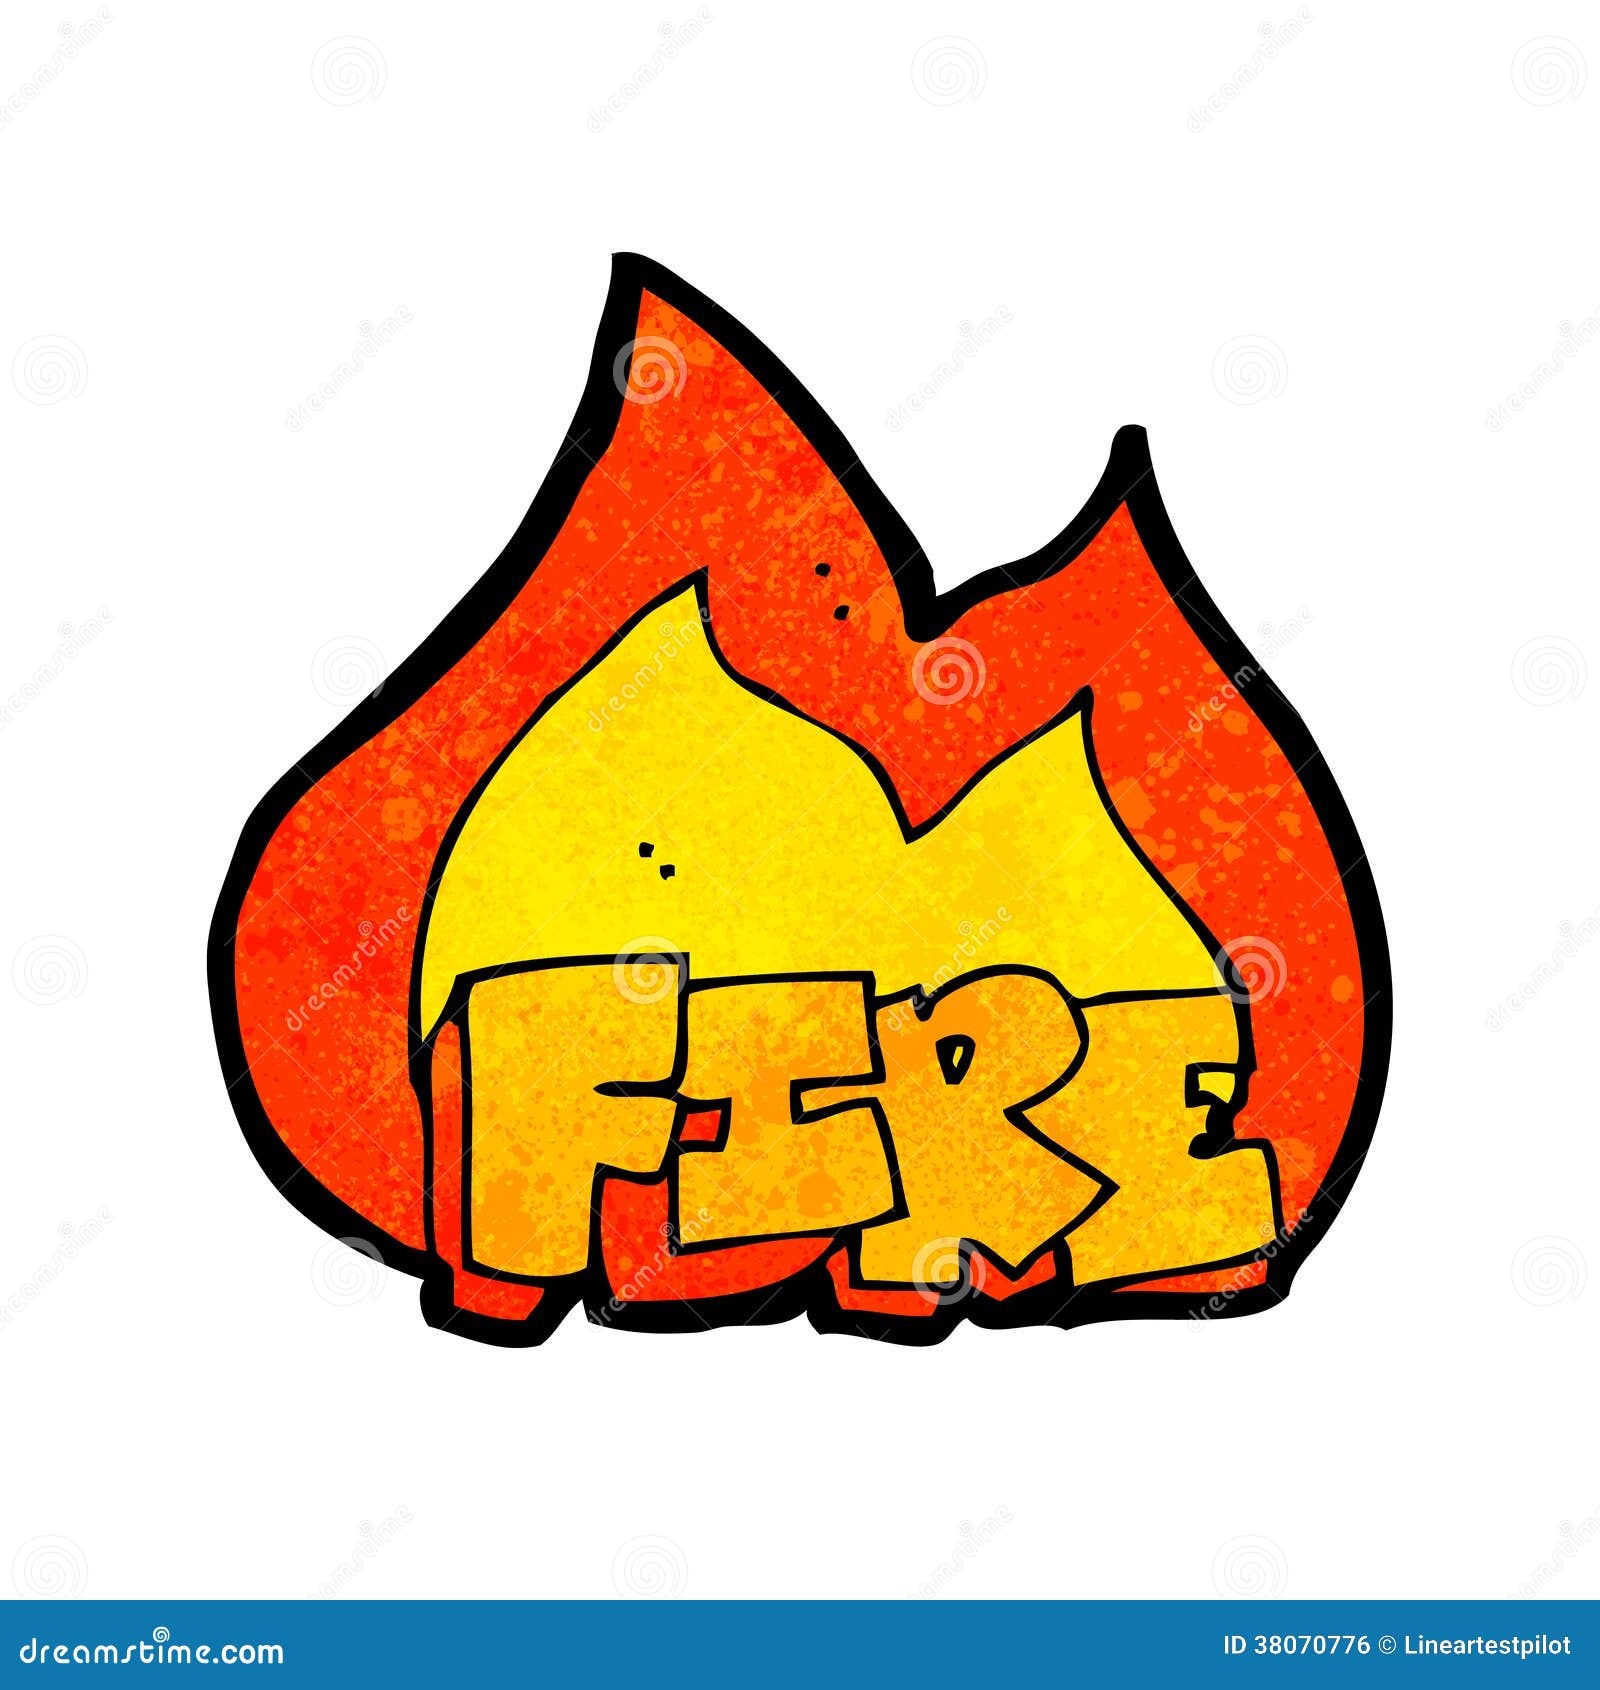 Cartoon fire symbol stock illustration. Illustration of flames - 38070776